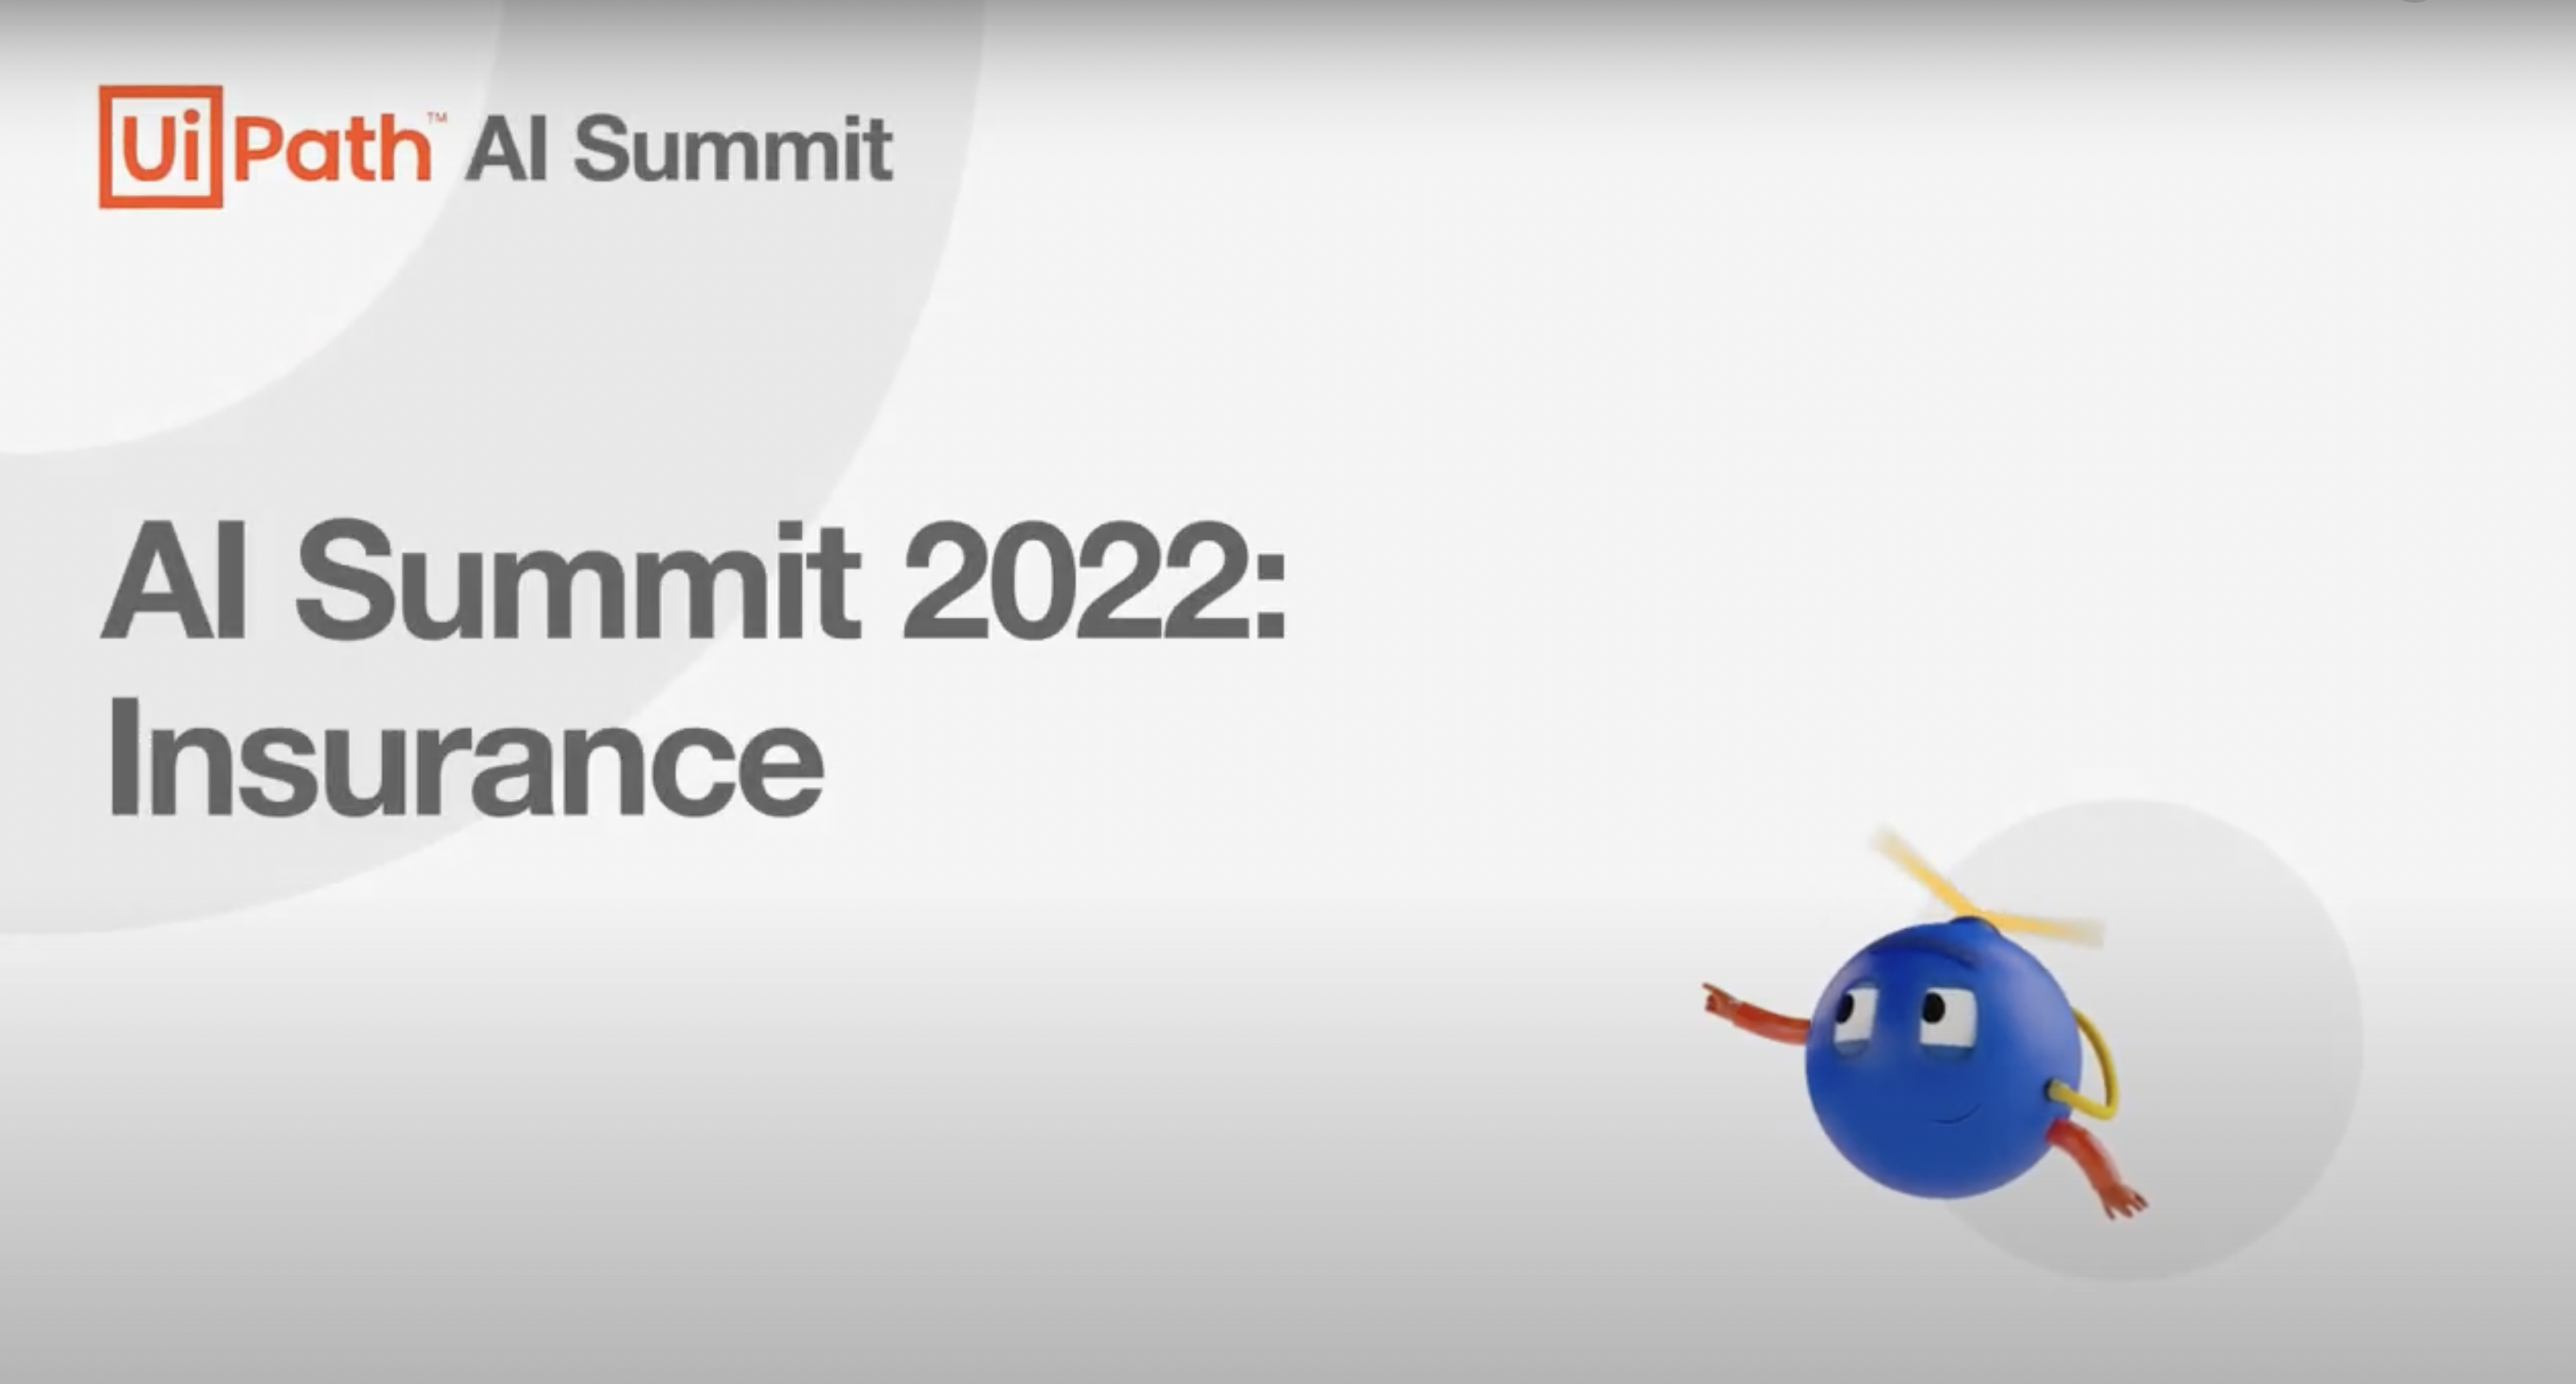  insurance artificial intelligence UiPath AI Summit 2022